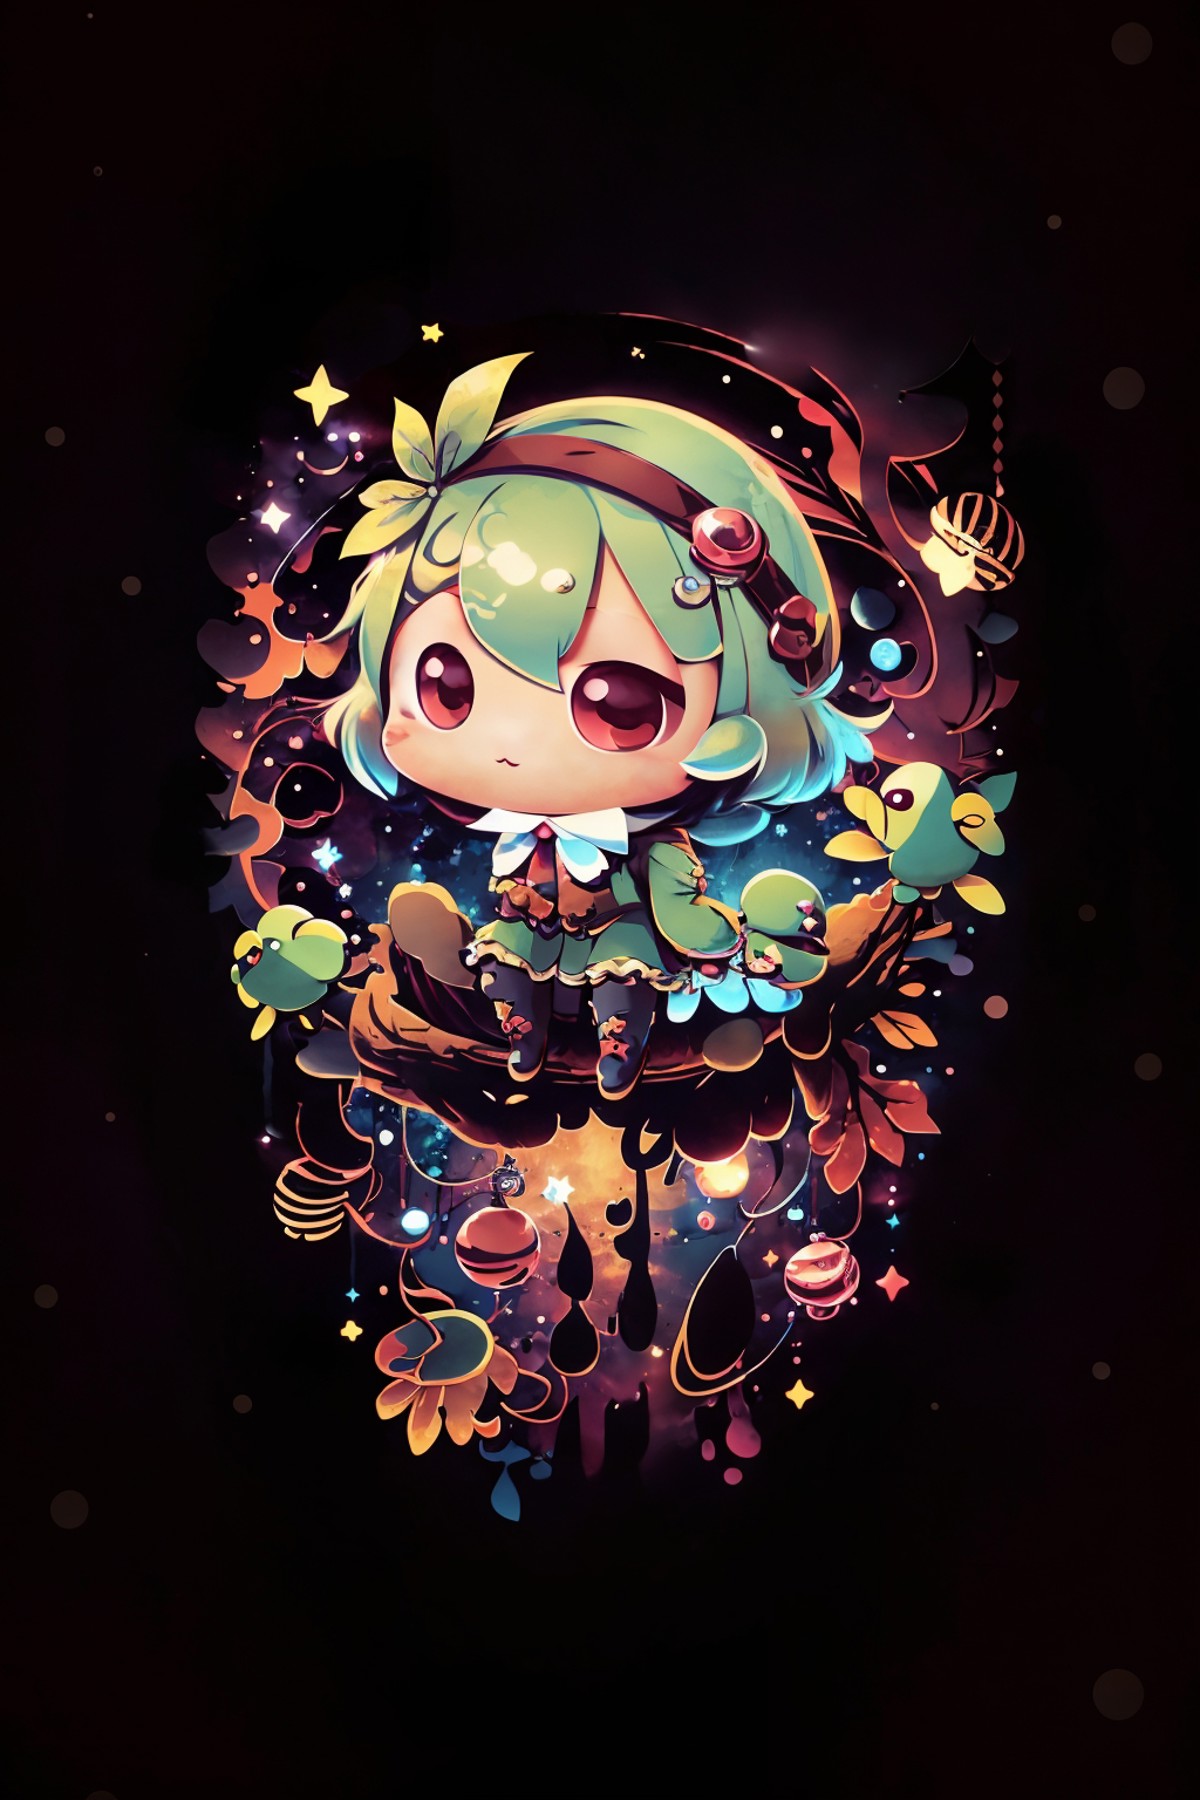 cute00d, Kakapo, chibi girl, starry background <lora:cute00d-000020:1.1>